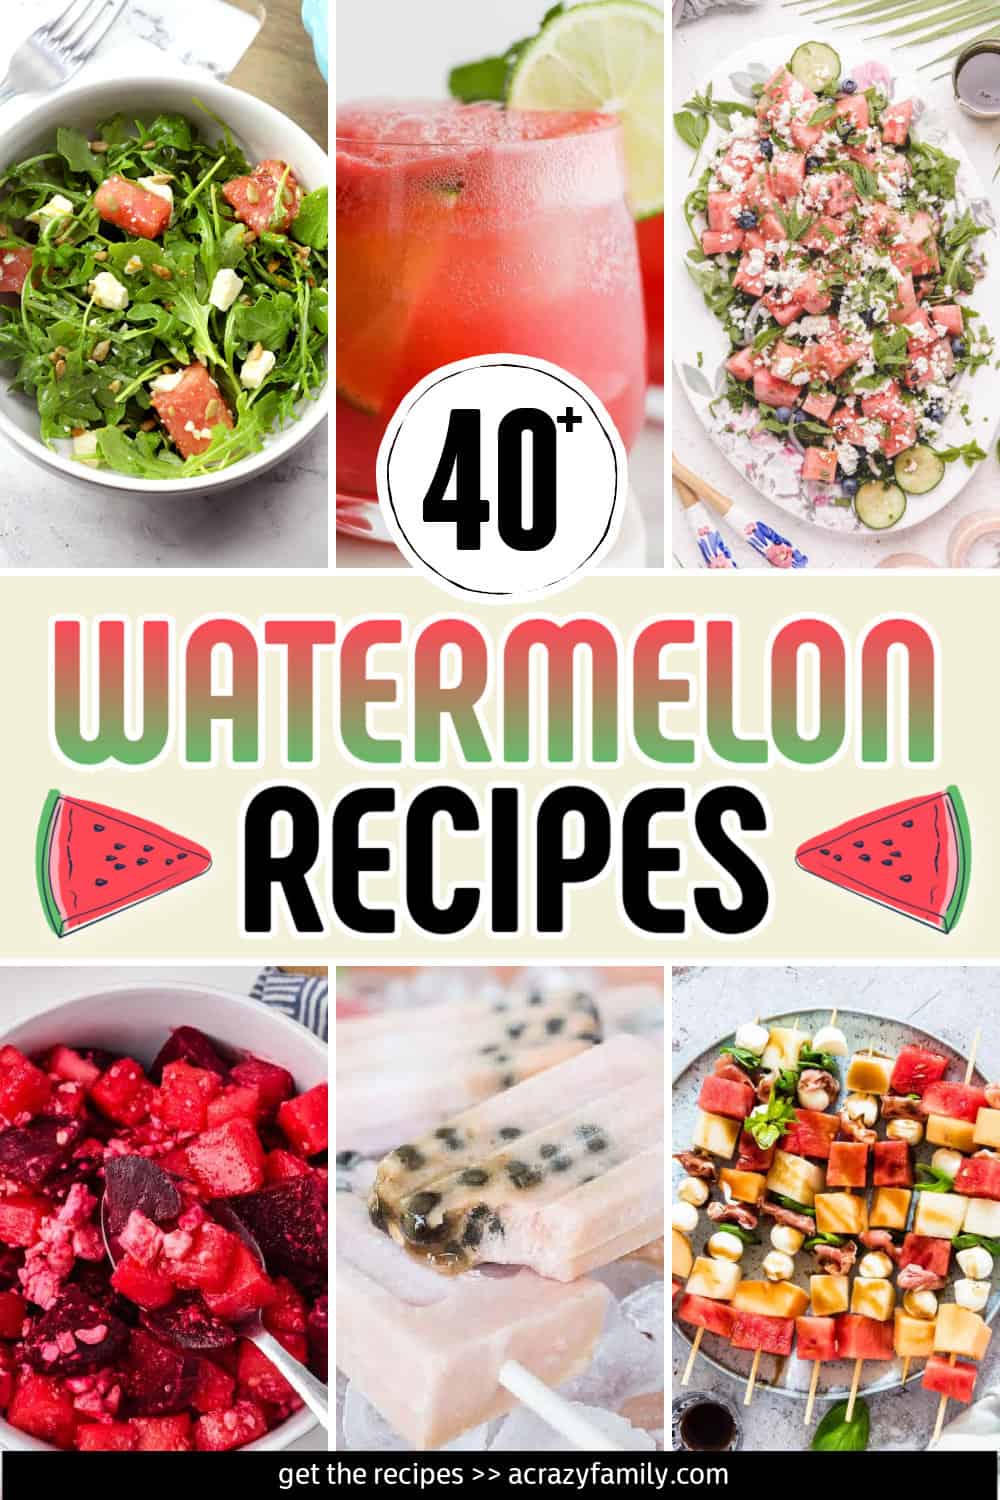 watermelon recipes pin